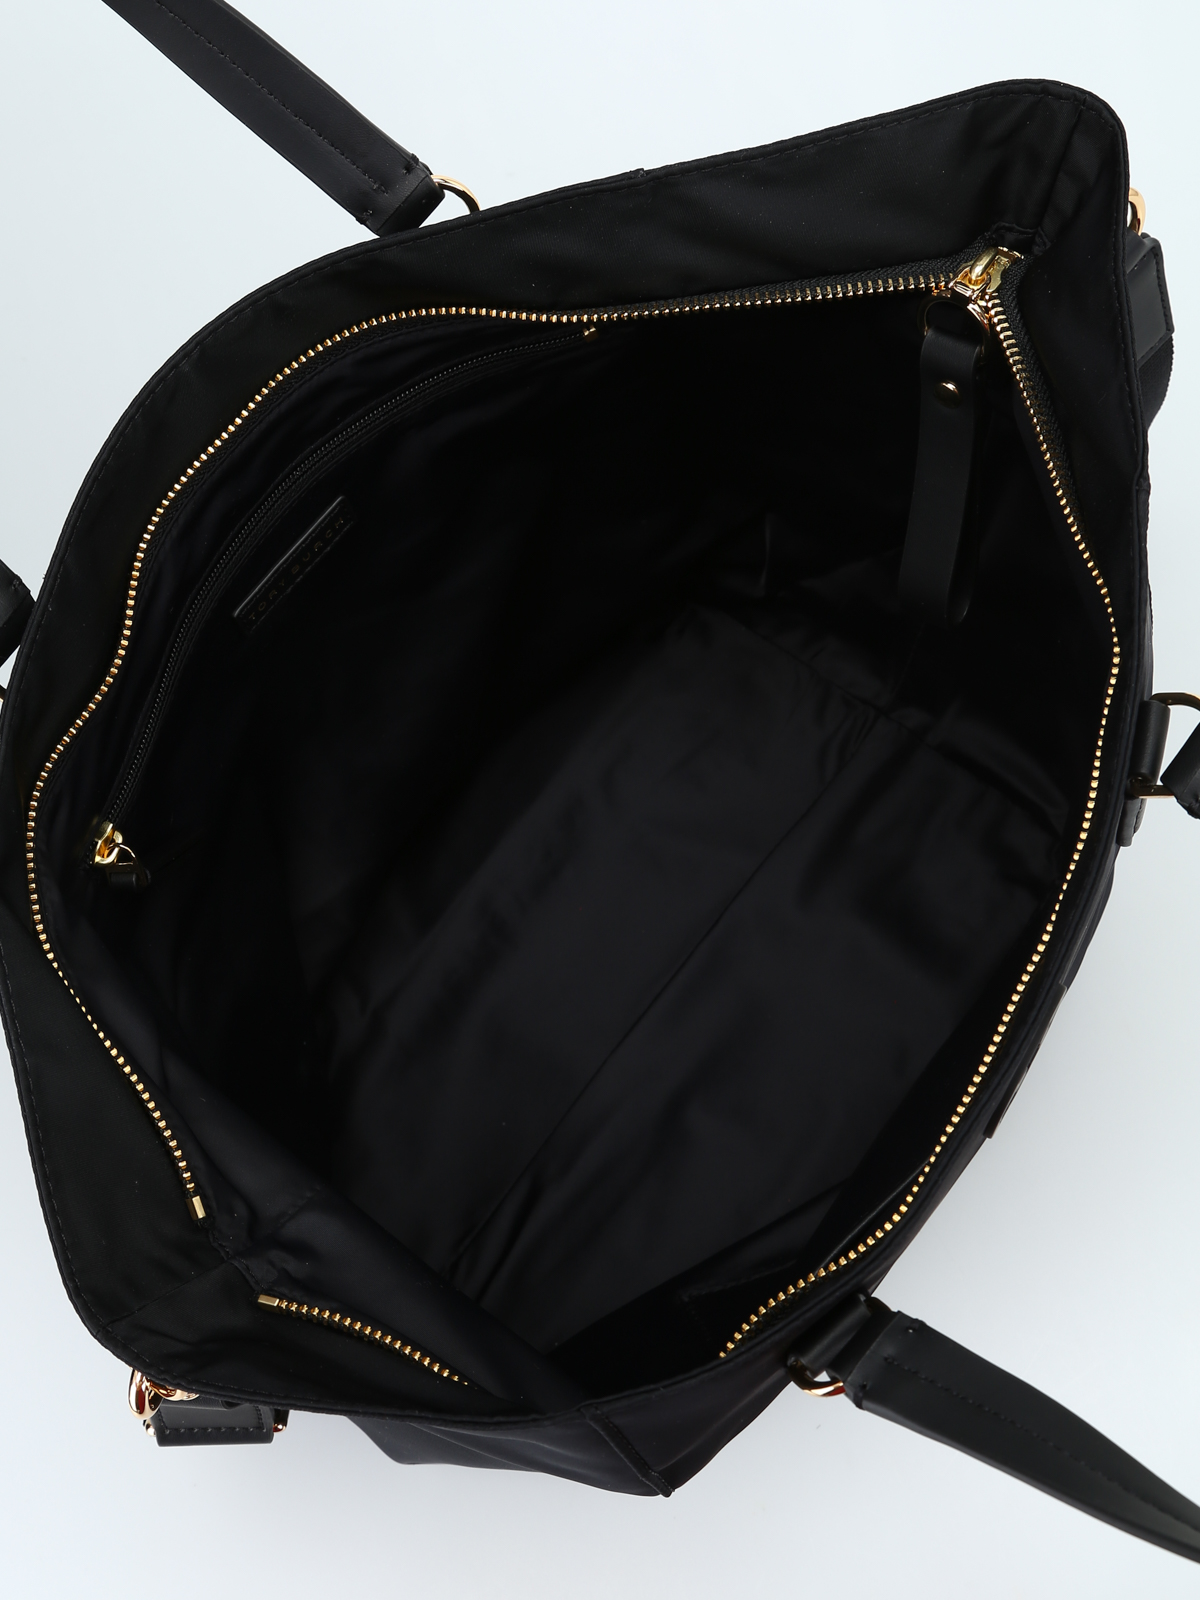 Totes bags Tory Burch - Tilda black nylon small tote - 51328001